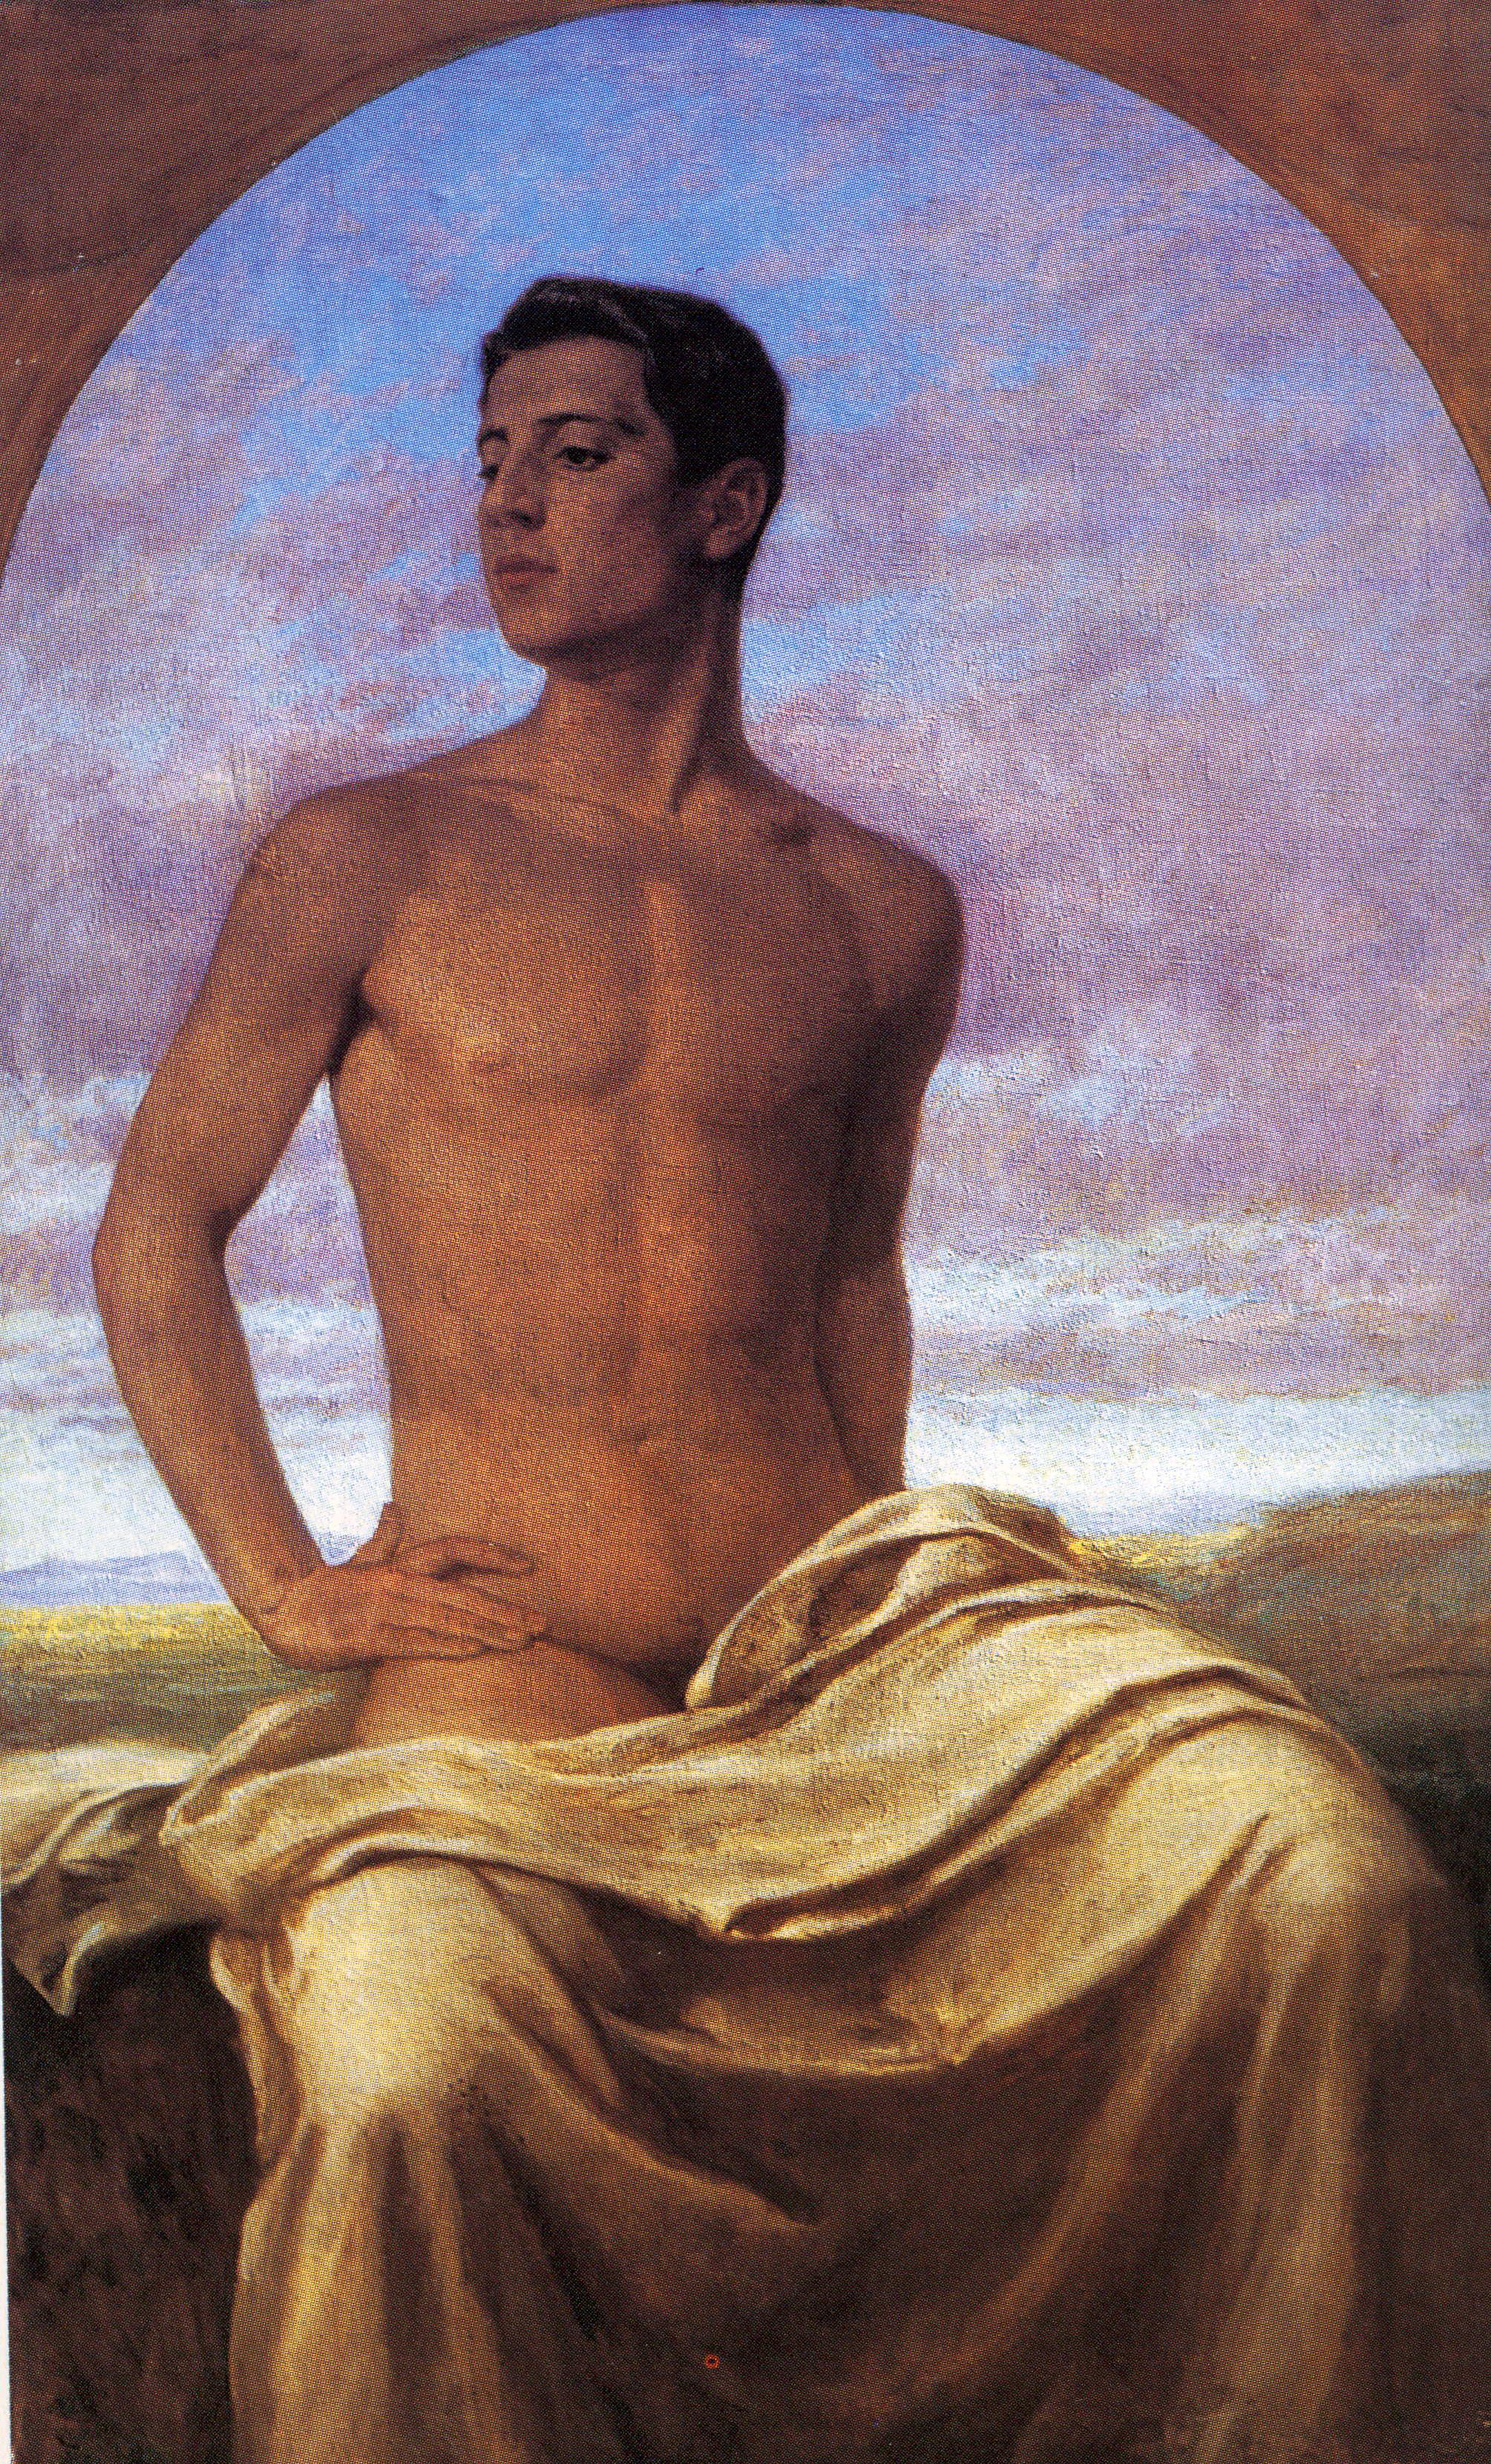 Nino Cesarini, amant d'Adelswärd-Fersen, peint par Paul Hoecker, 1904 - source : WikiCommons